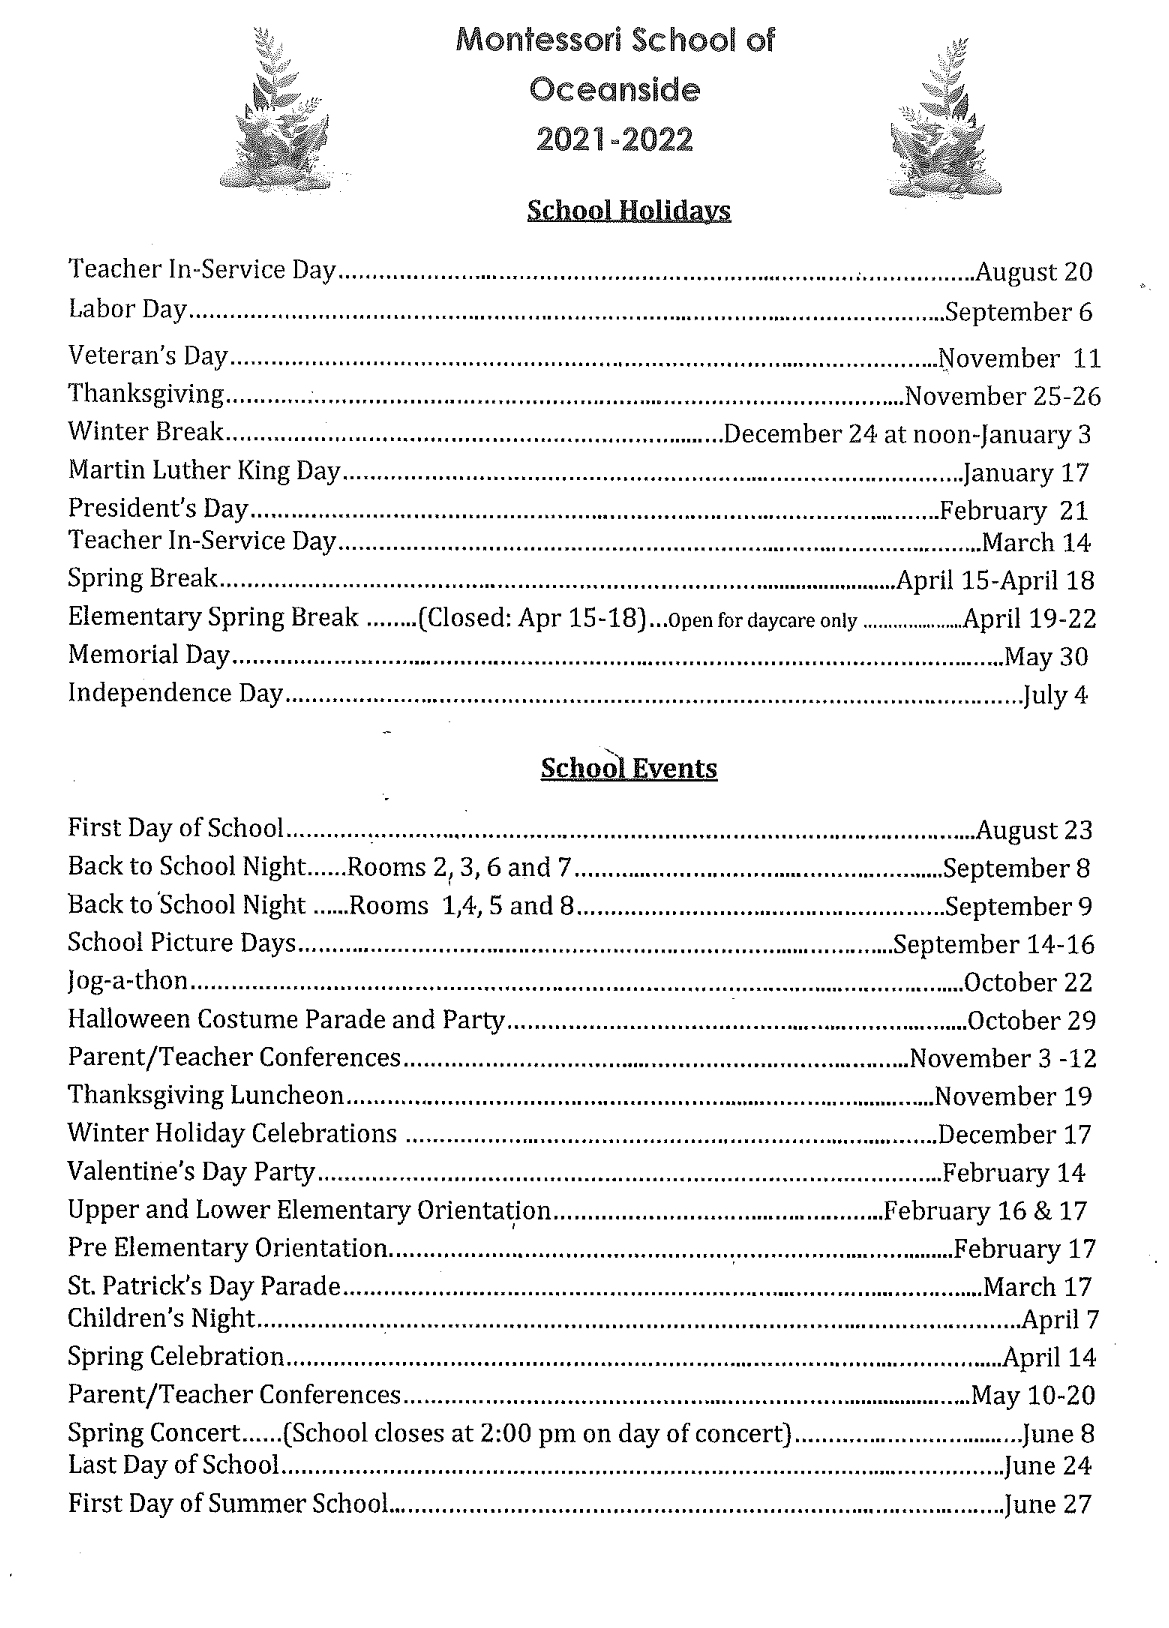 School Calendar 2020-2021